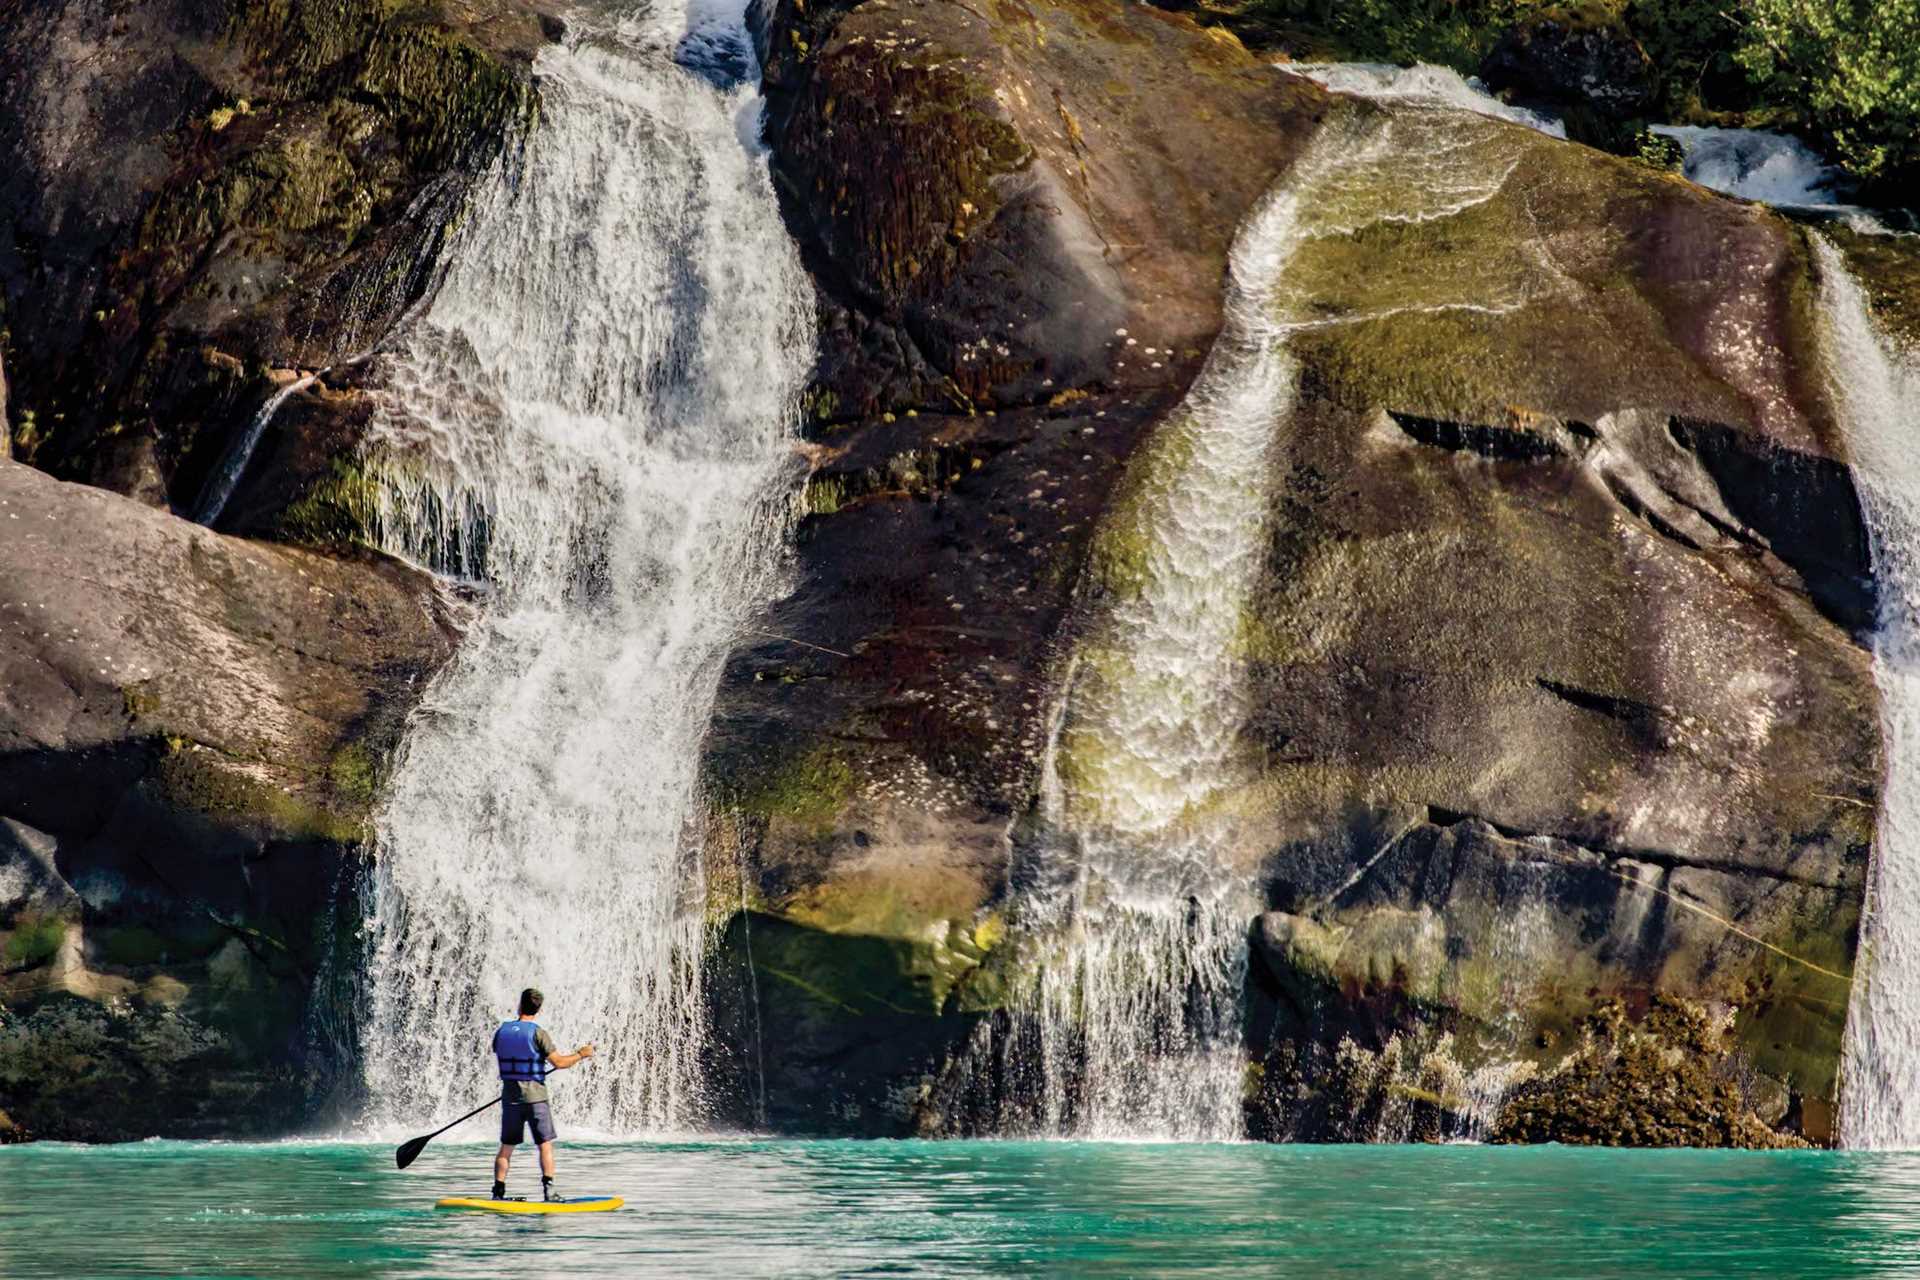 Paddleboarding Past a Waterfall.jpg